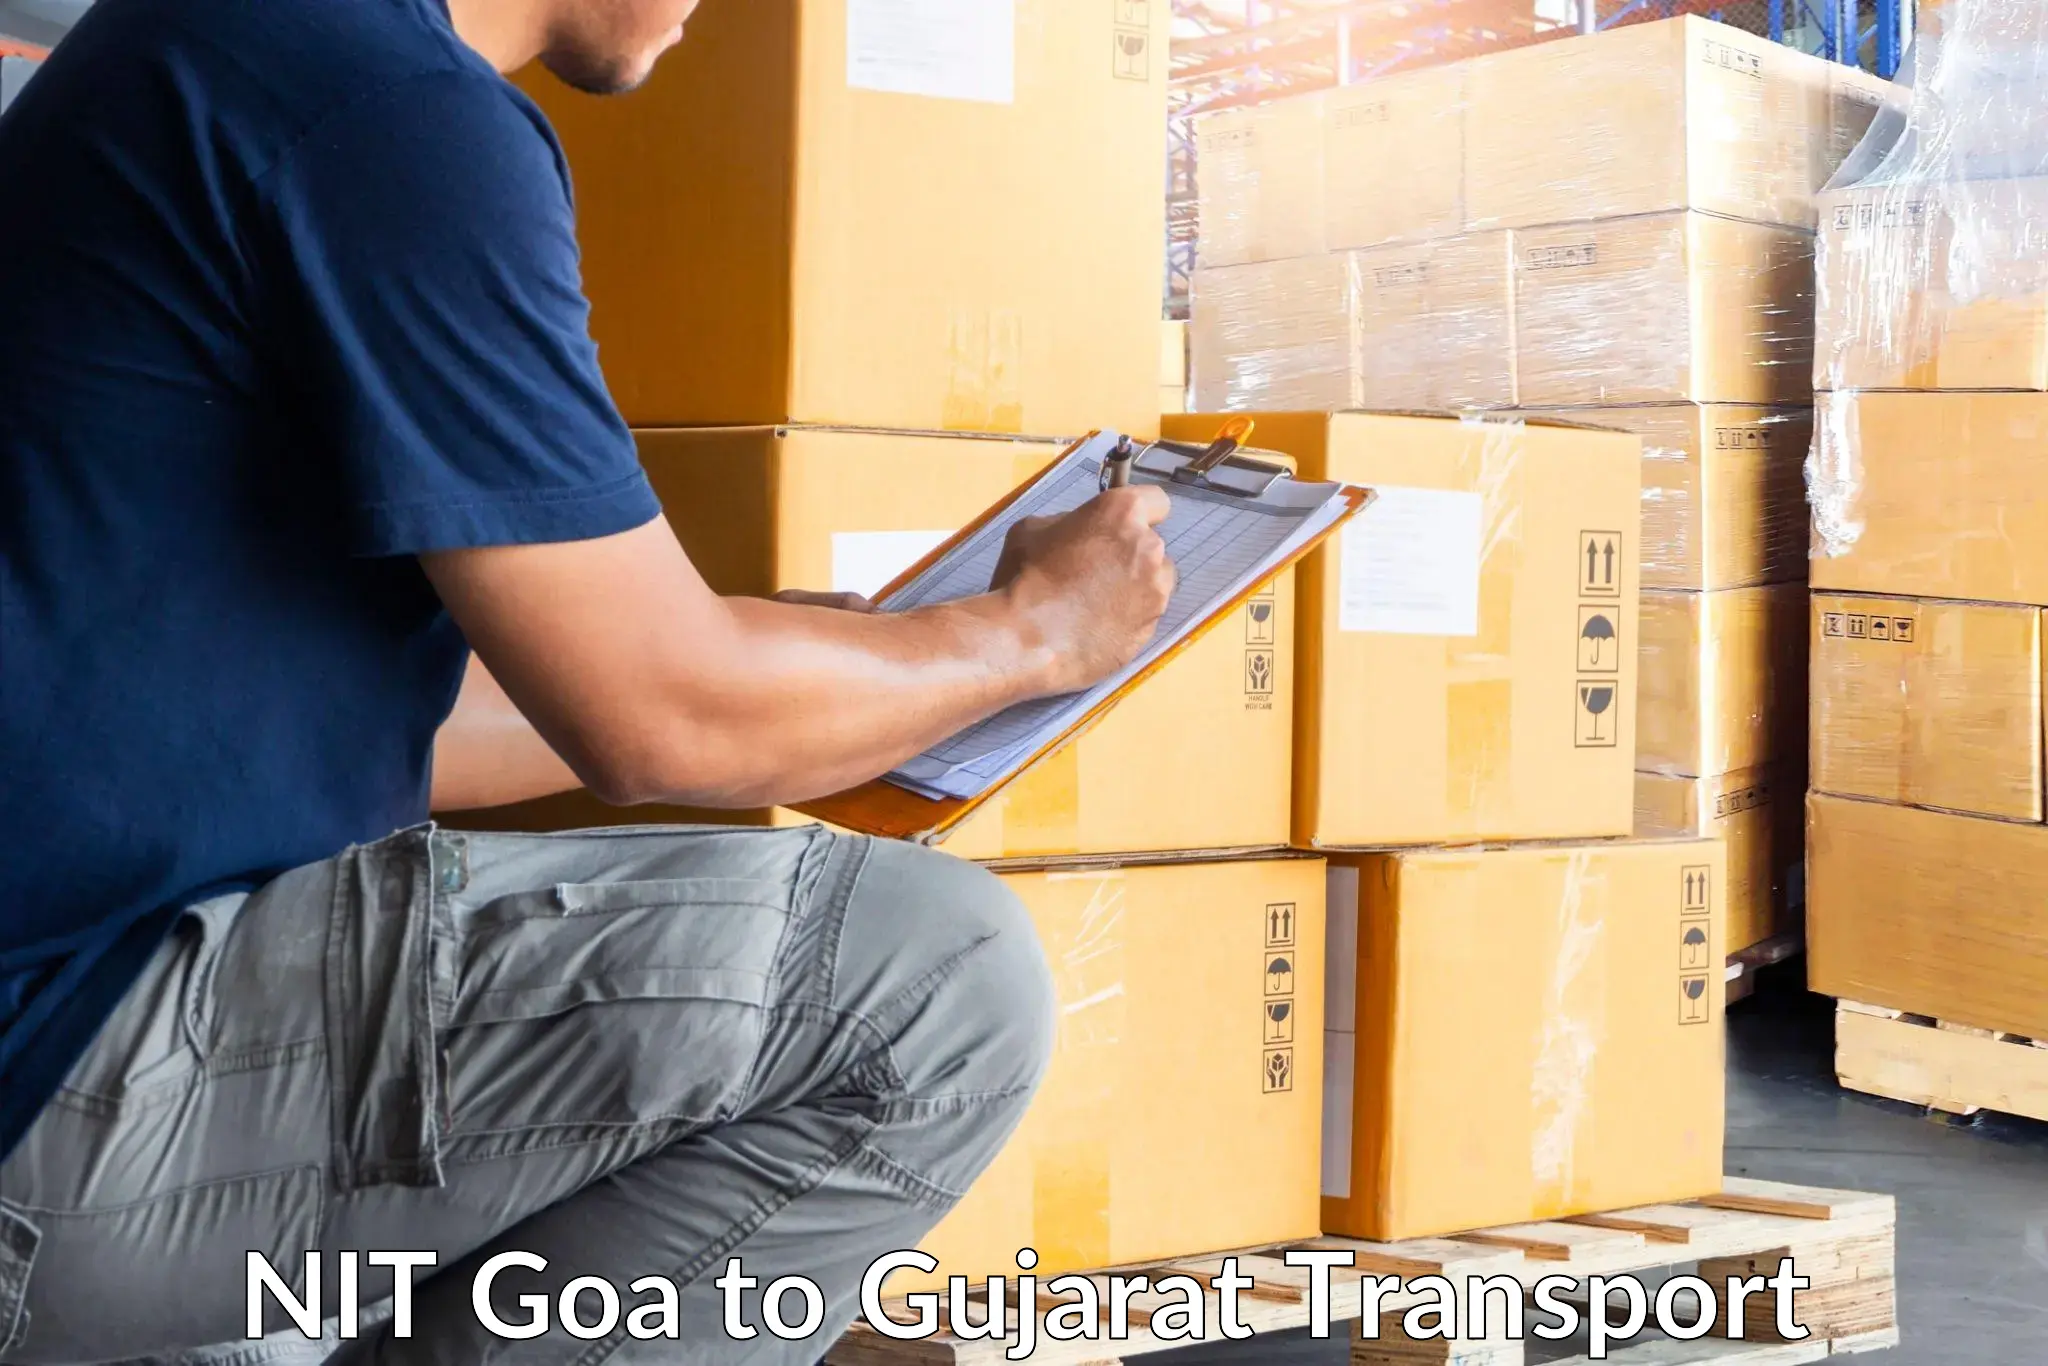 Delivery service NIT Goa to Vatadara